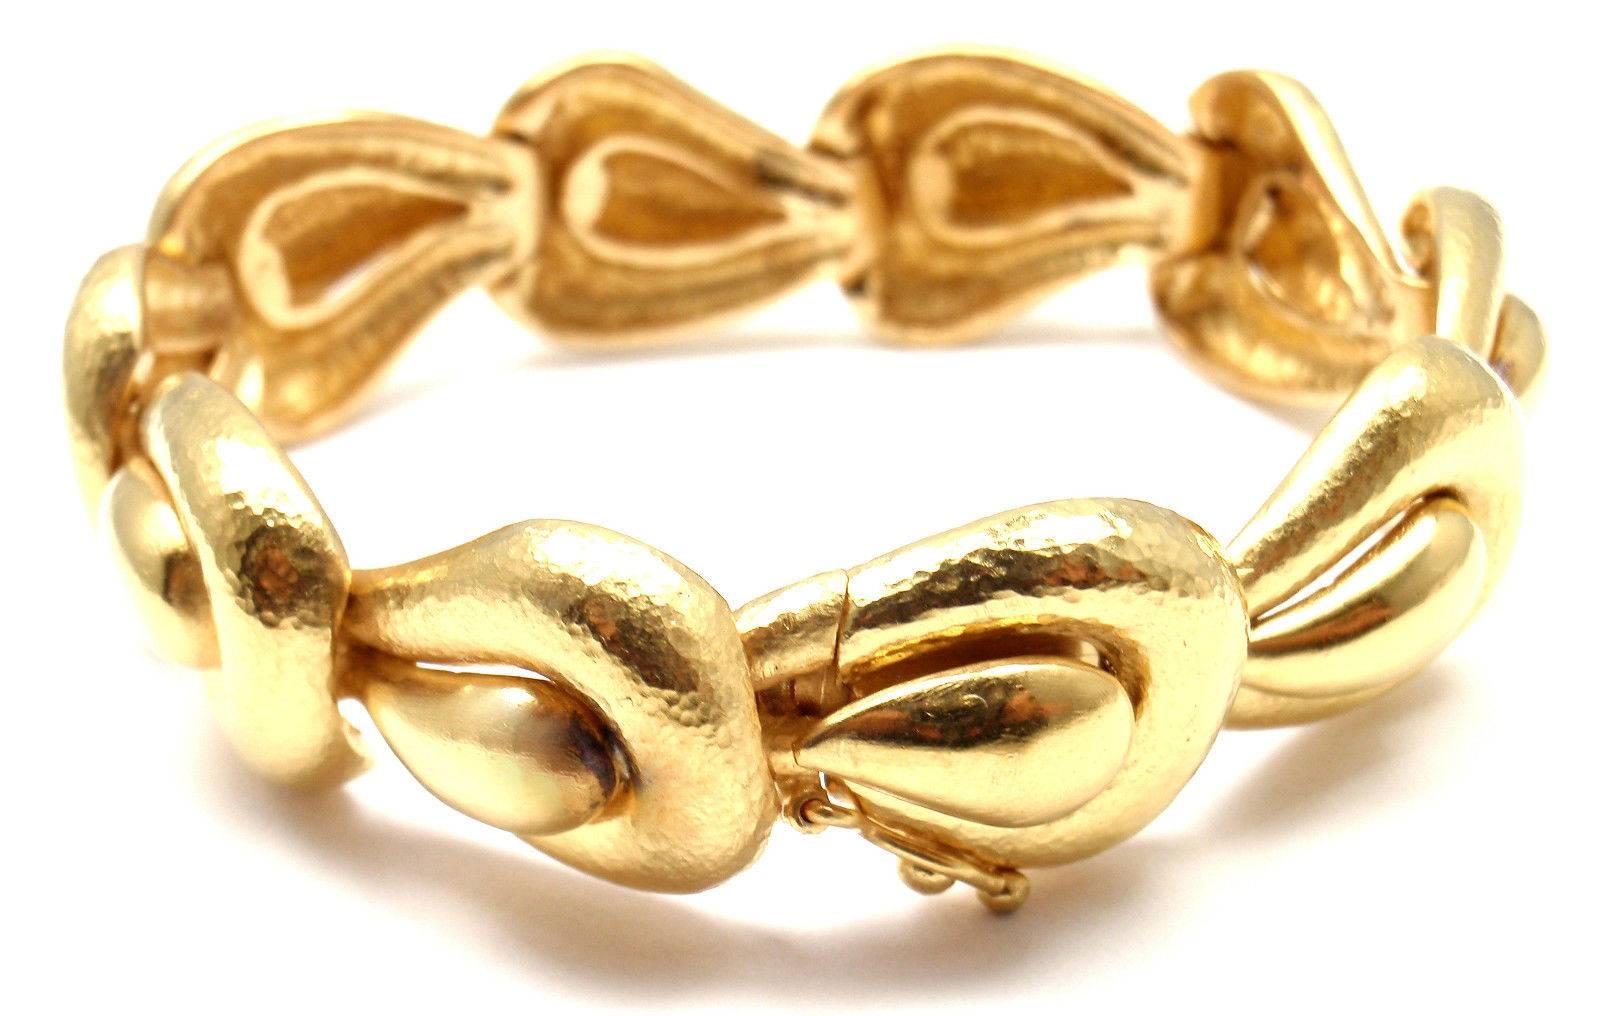 18k Yellow Gold ILIAS LALAOUNIS Bangle Bracelet.

Measurements: 
Length: 7